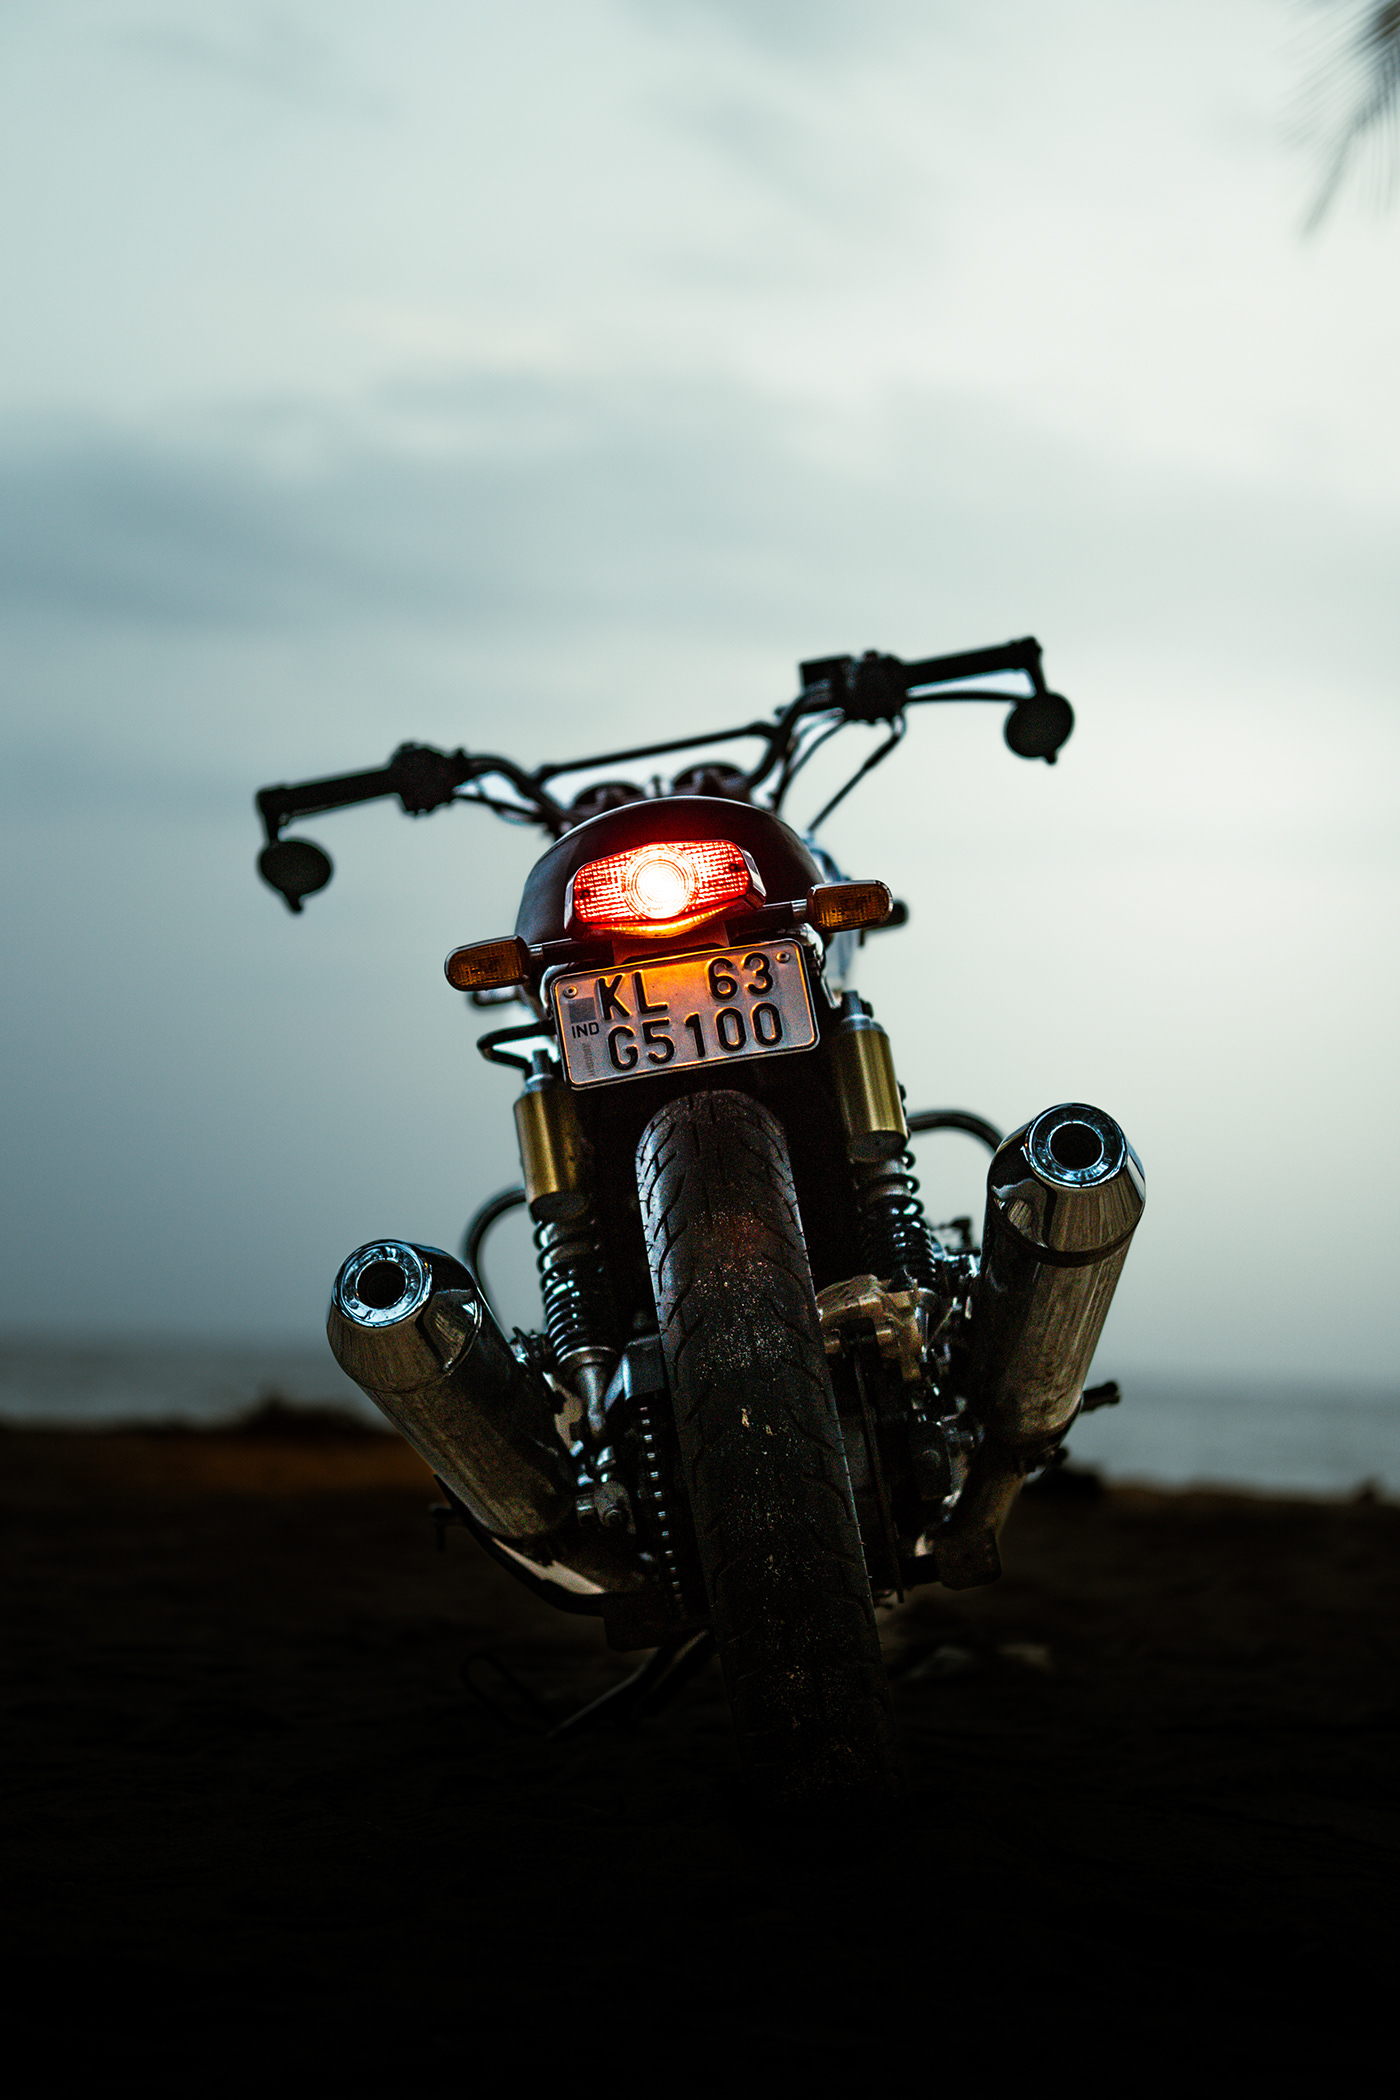 royal enfield motorcycle Automotive Photography India bike photography